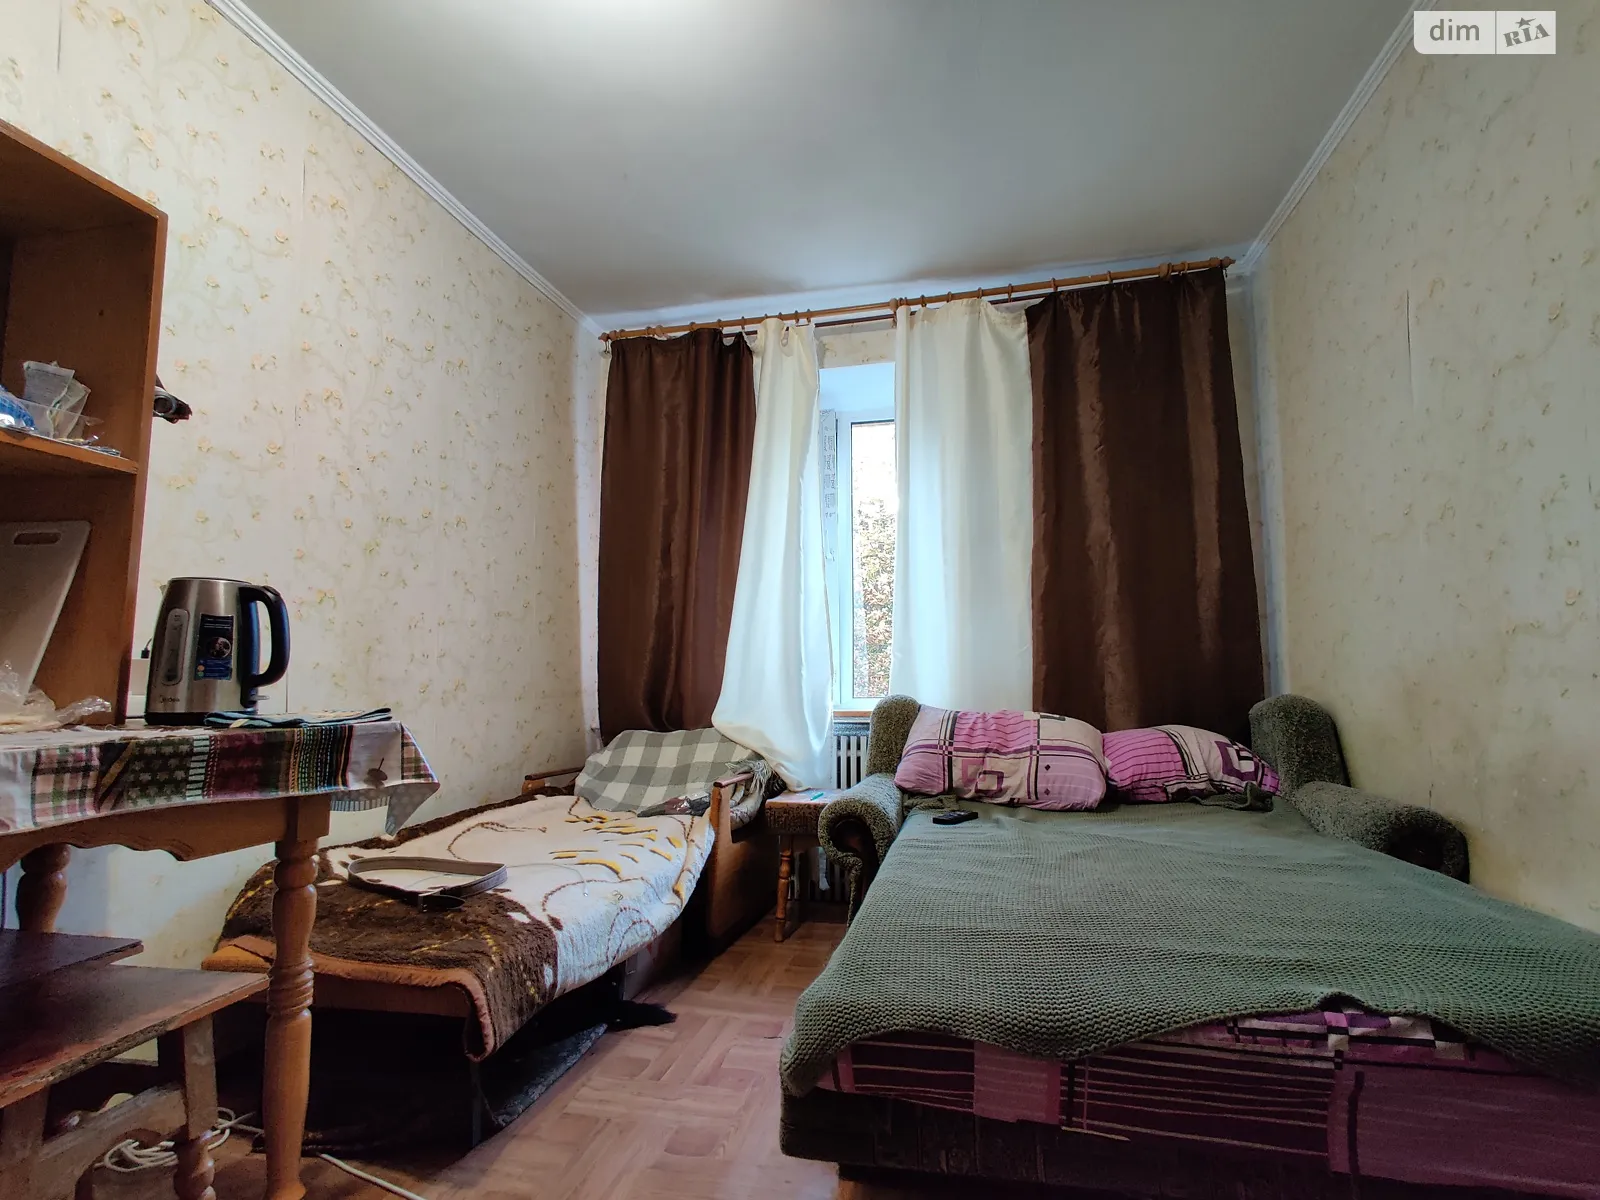 Продается комната 28 кв. м в Виннице, цена: 14000 $ - фото 1